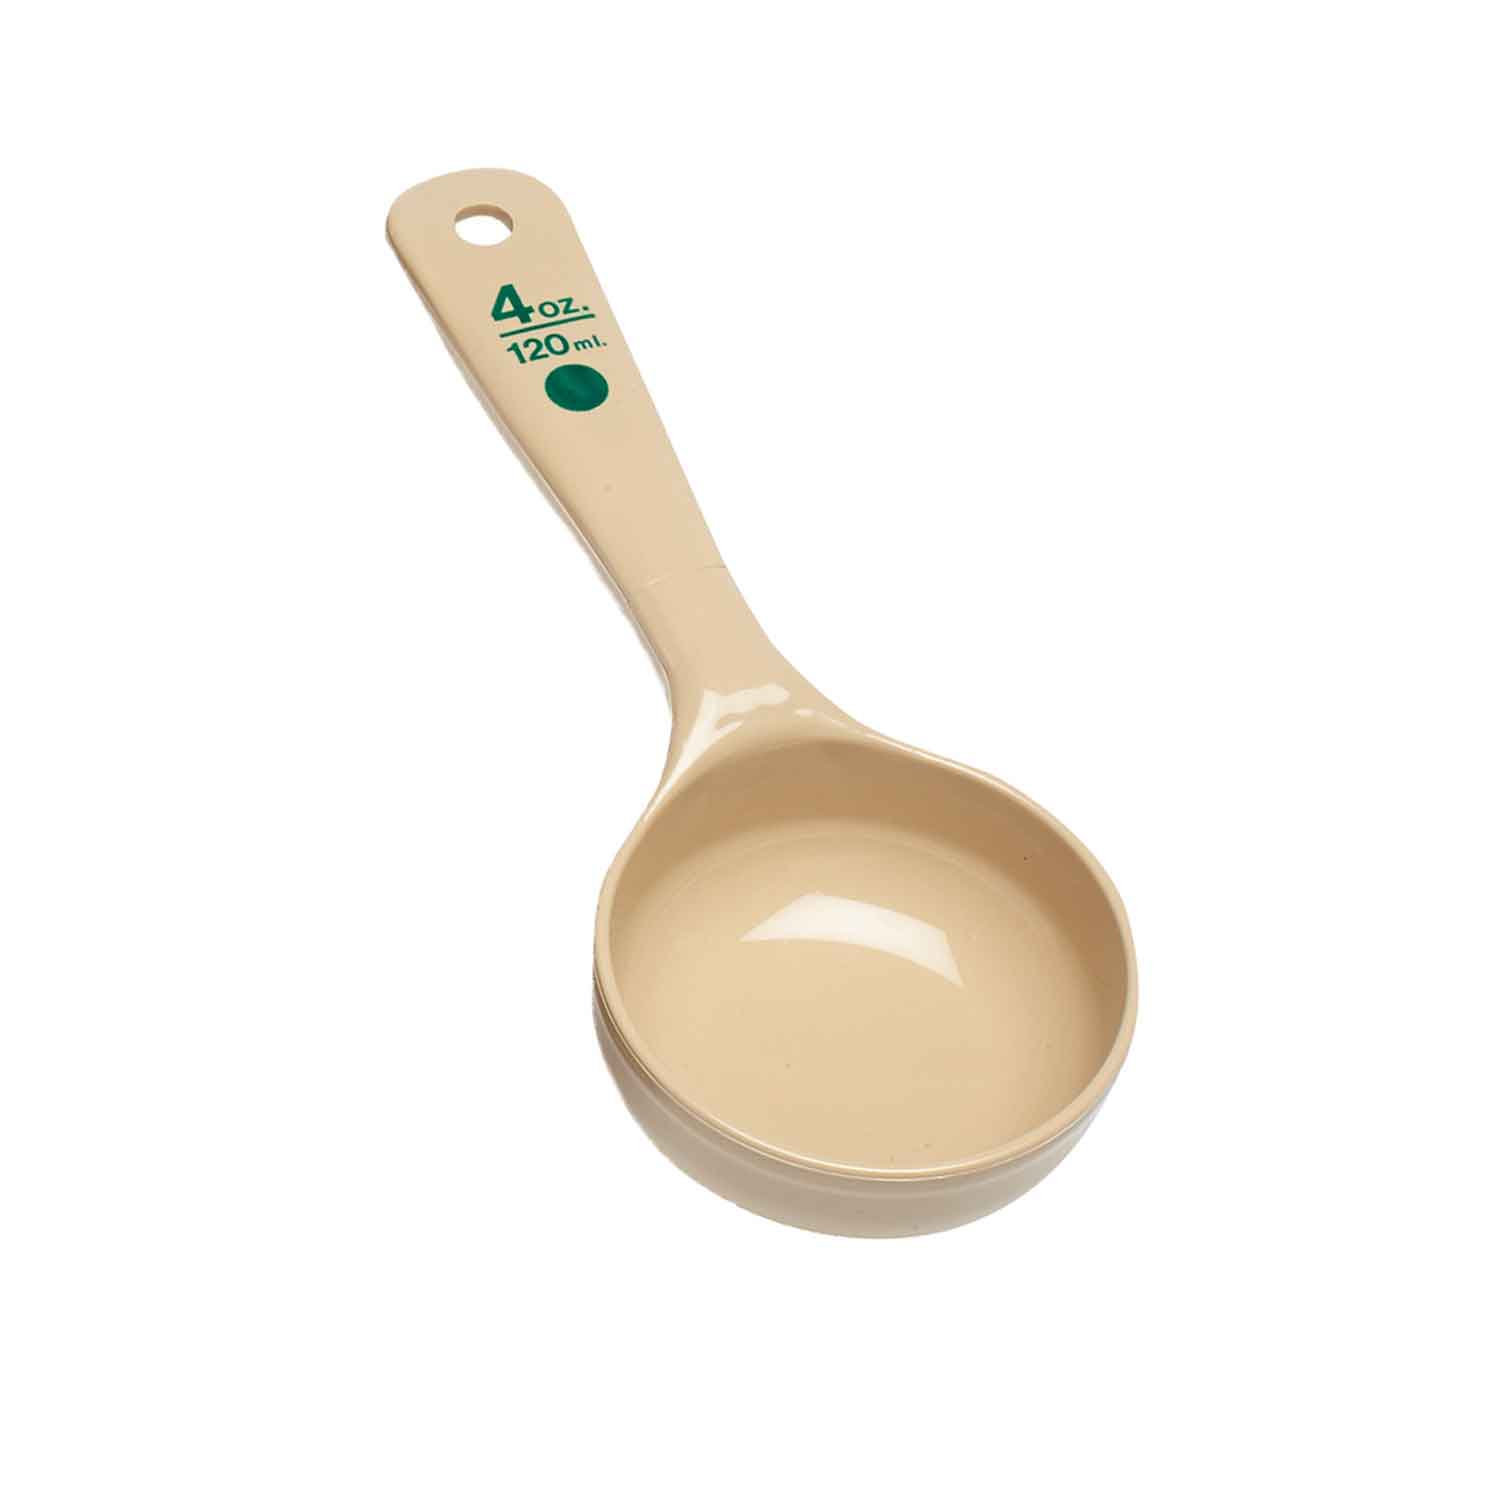 4 oz. Portion Control Serving Spoon